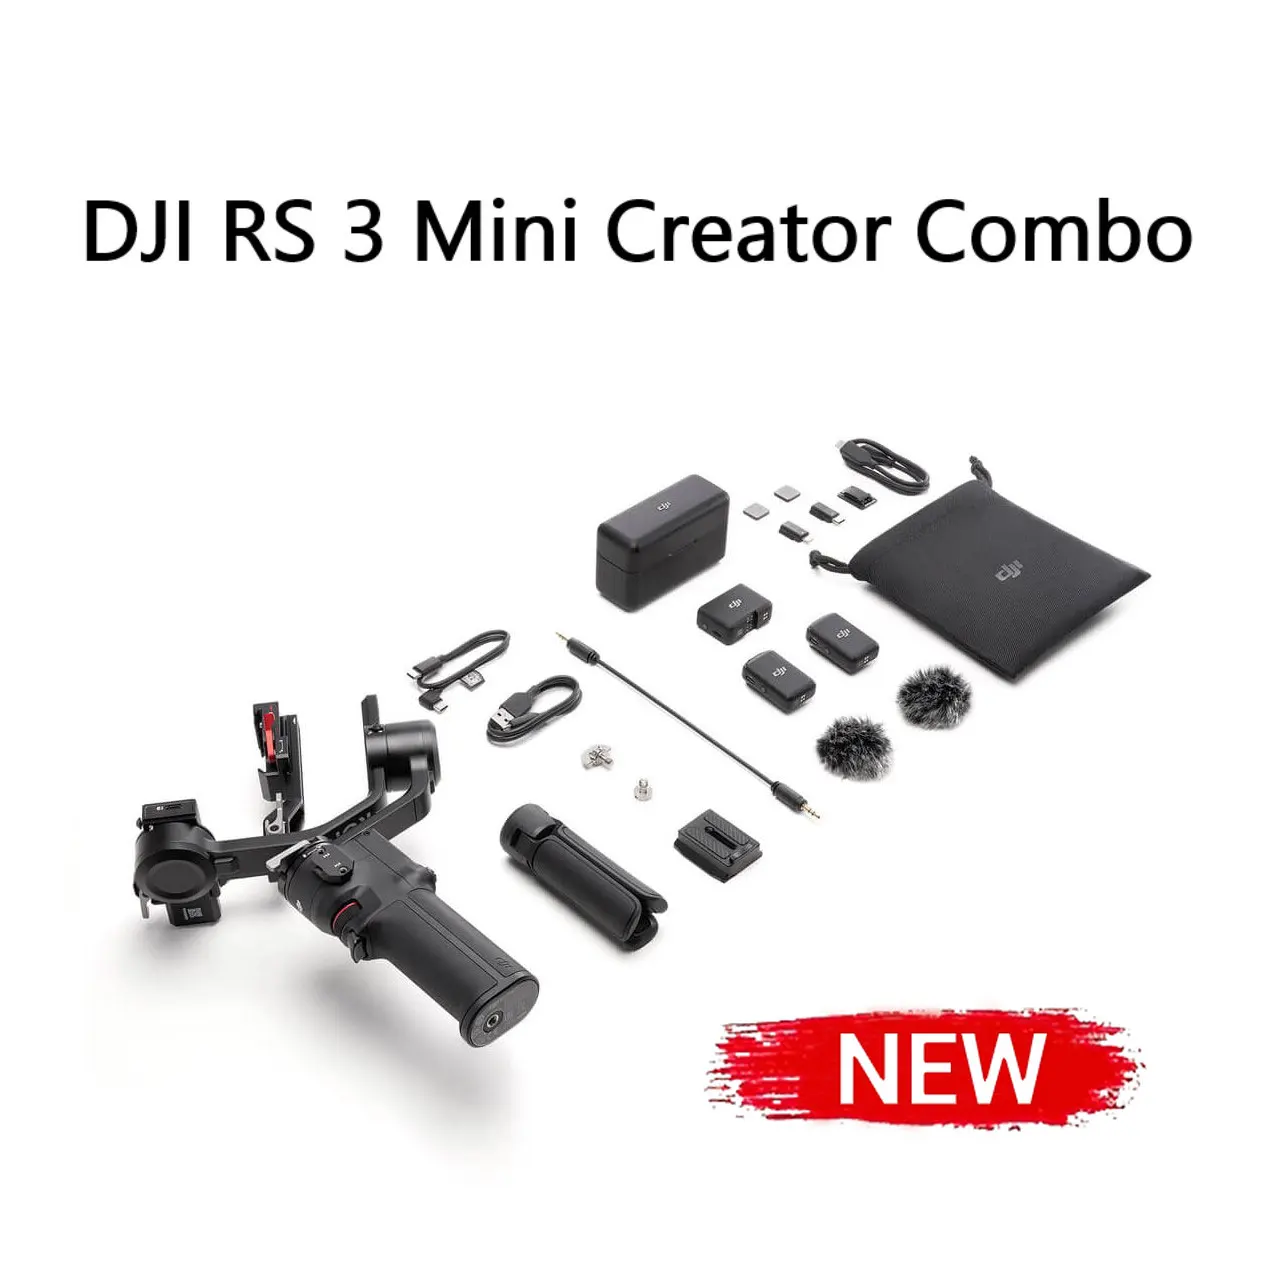 For DJI RS3 / DJI RS 3 Combo DJI Ronin S Rs2 RSC 2 Rs3 Pro Mini Stabilizer  Handheld Camera Gimbal for Sony Canon DSLR Cameras - AliExpress